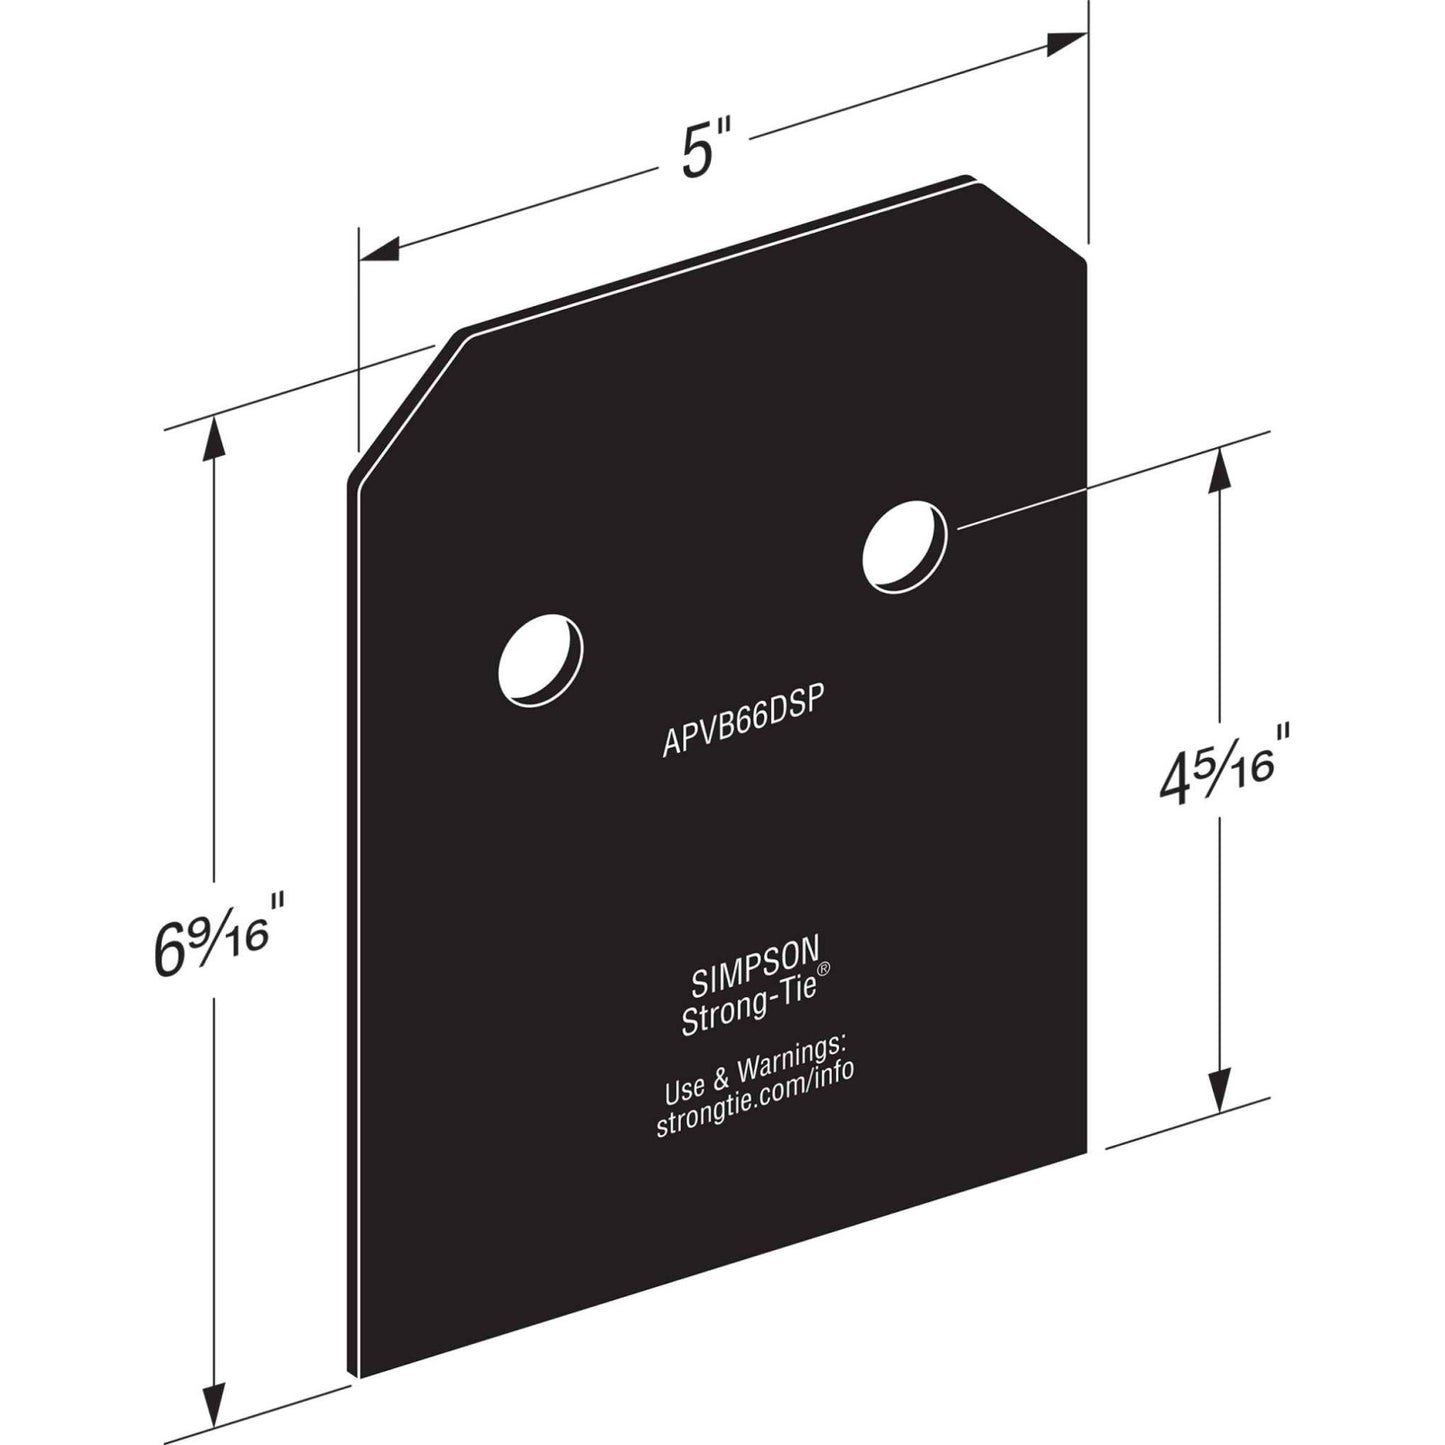 Simpson APVB66DSP Avant Decorative Post Base Plates Black Powder Coat image 1 of 4 image 2 of 4 image 3 of 4